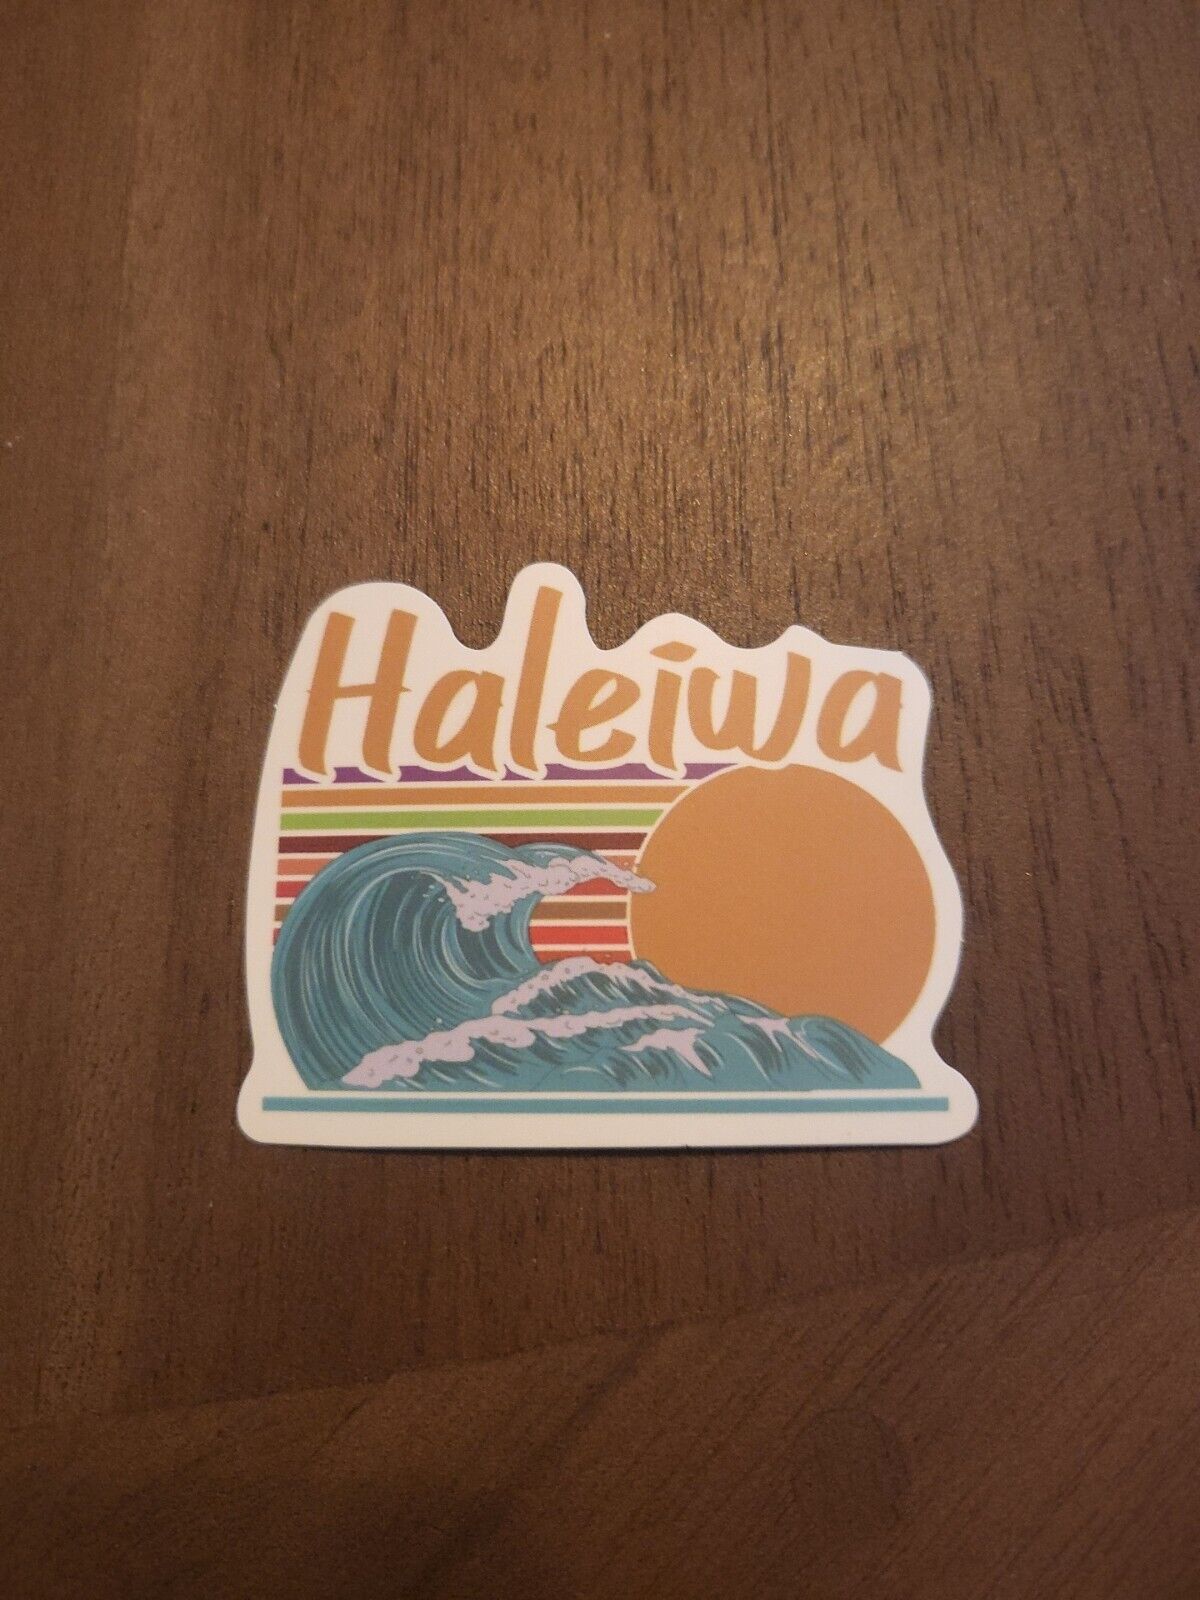 Haleiwa Oahu Hawaii Sticker Decal